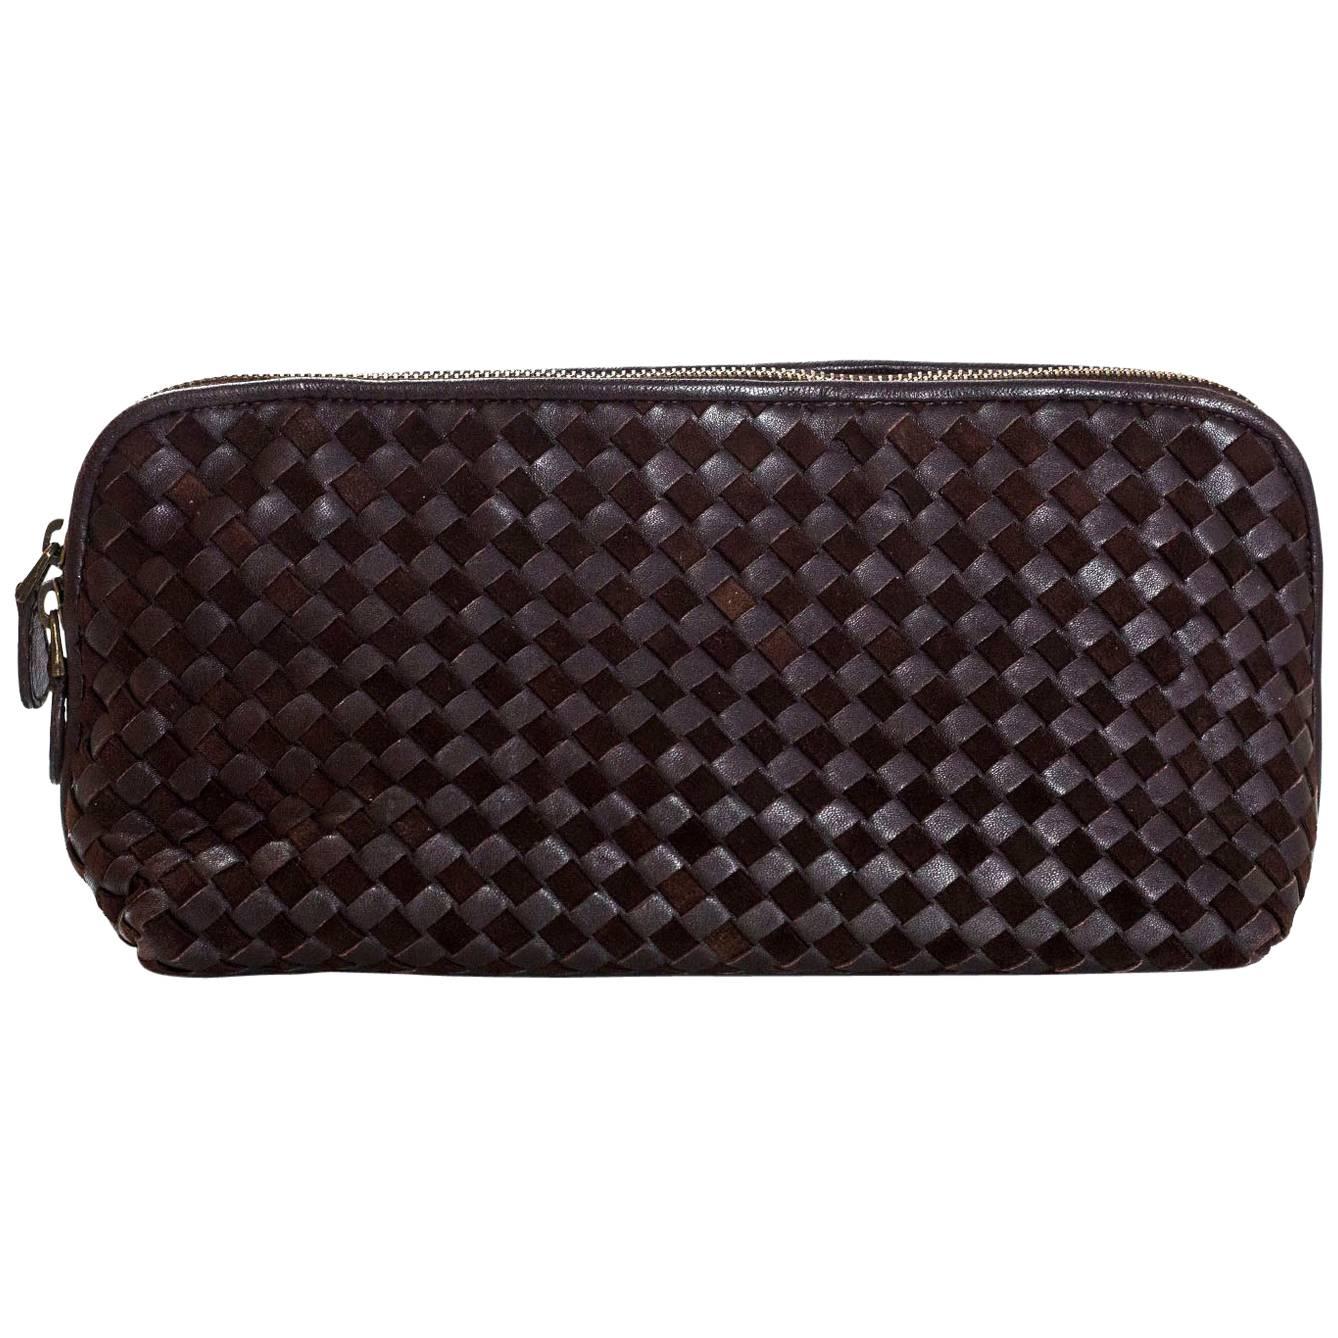 Bottega Veneta Brown Suede & Leather Intrecciato XL Cosmetic Case/Clutch Bag